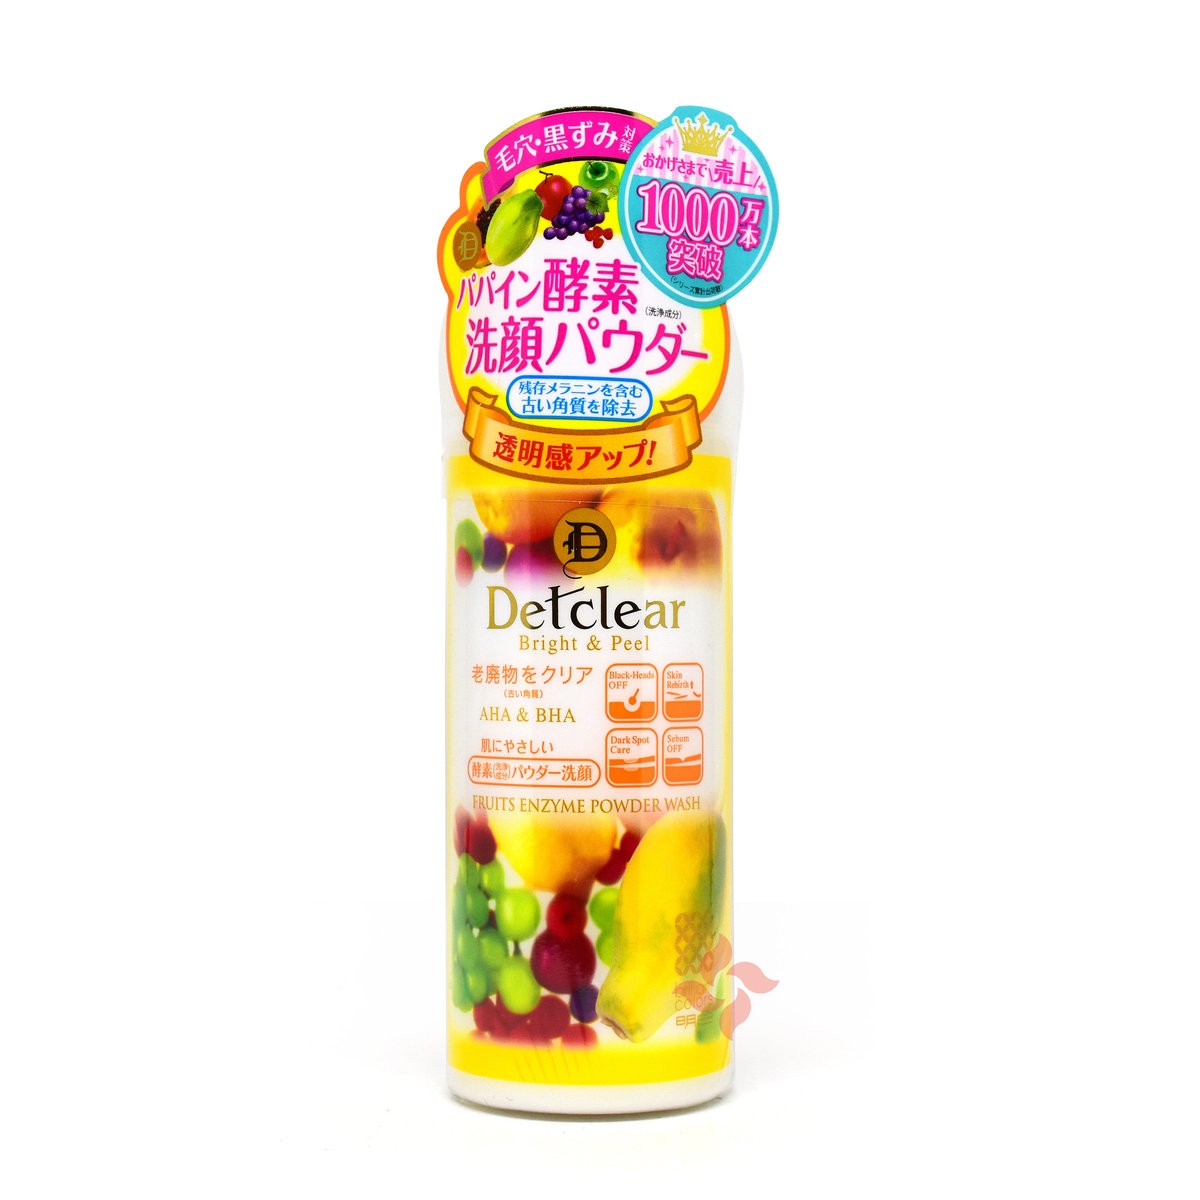 brilliant colors - MEISHOKU - DETCLEAR Bright & Peel Fruit Enzyme Powder Wash - 75g